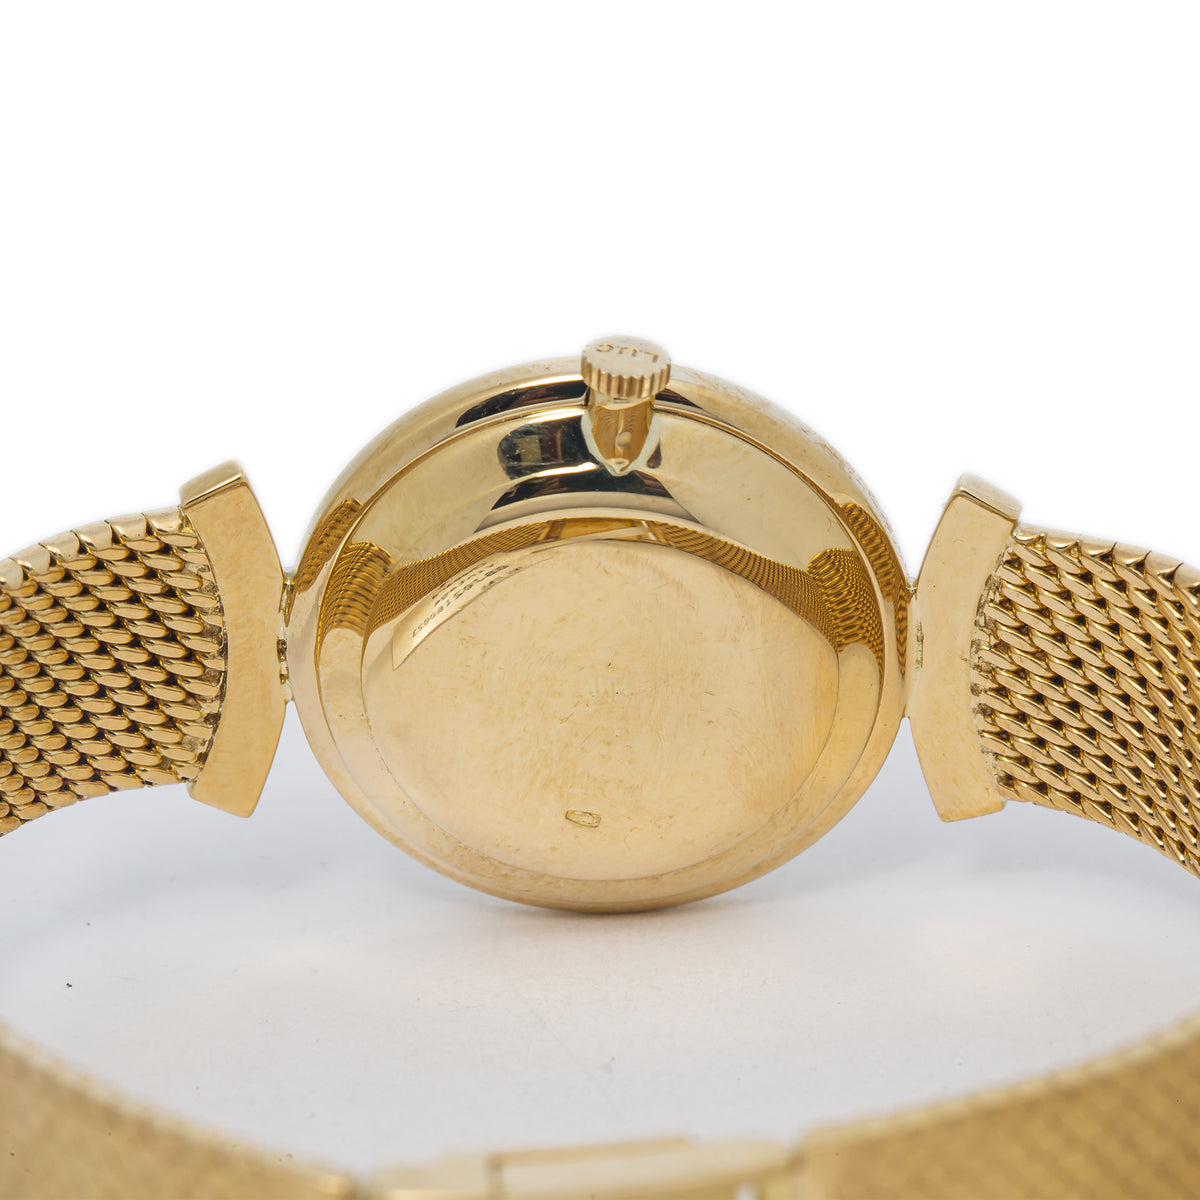 Chopard Vintage 18k Yellow Gold Diamonds Manual Winding Ladies Watch 25mm